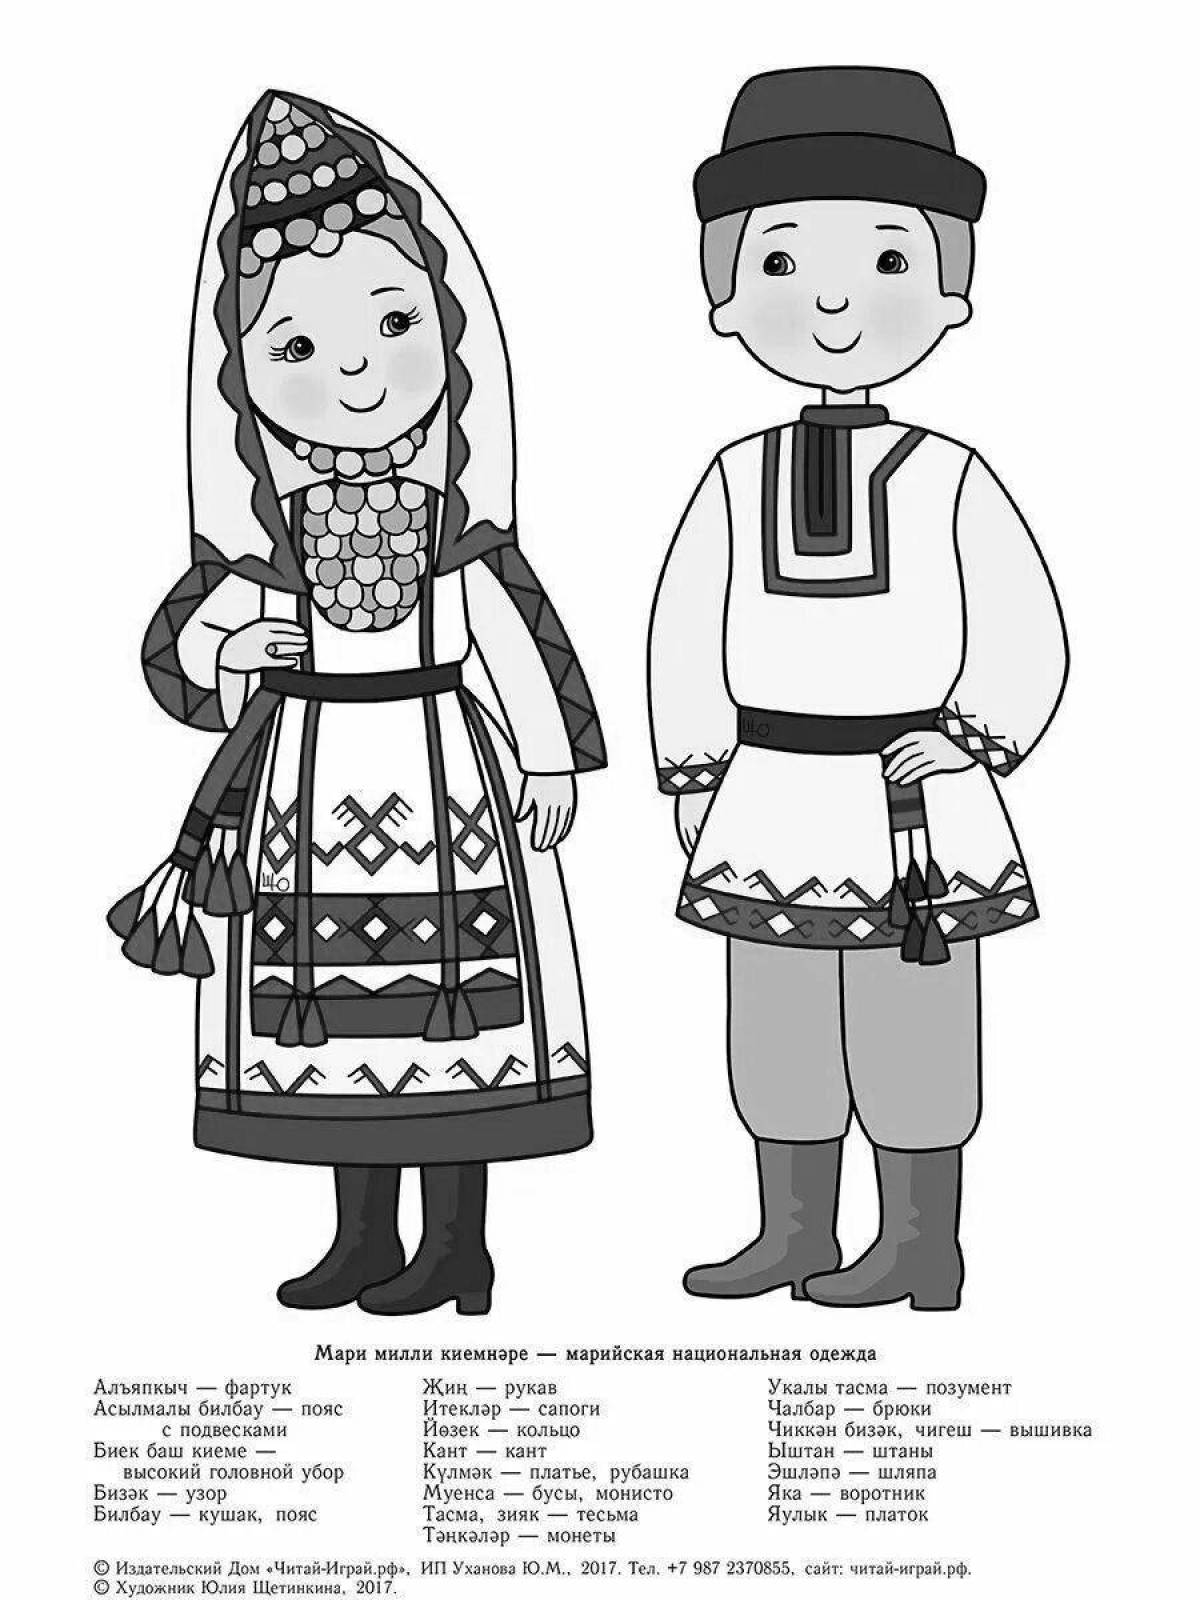 Gorgeous Mordovian national costume